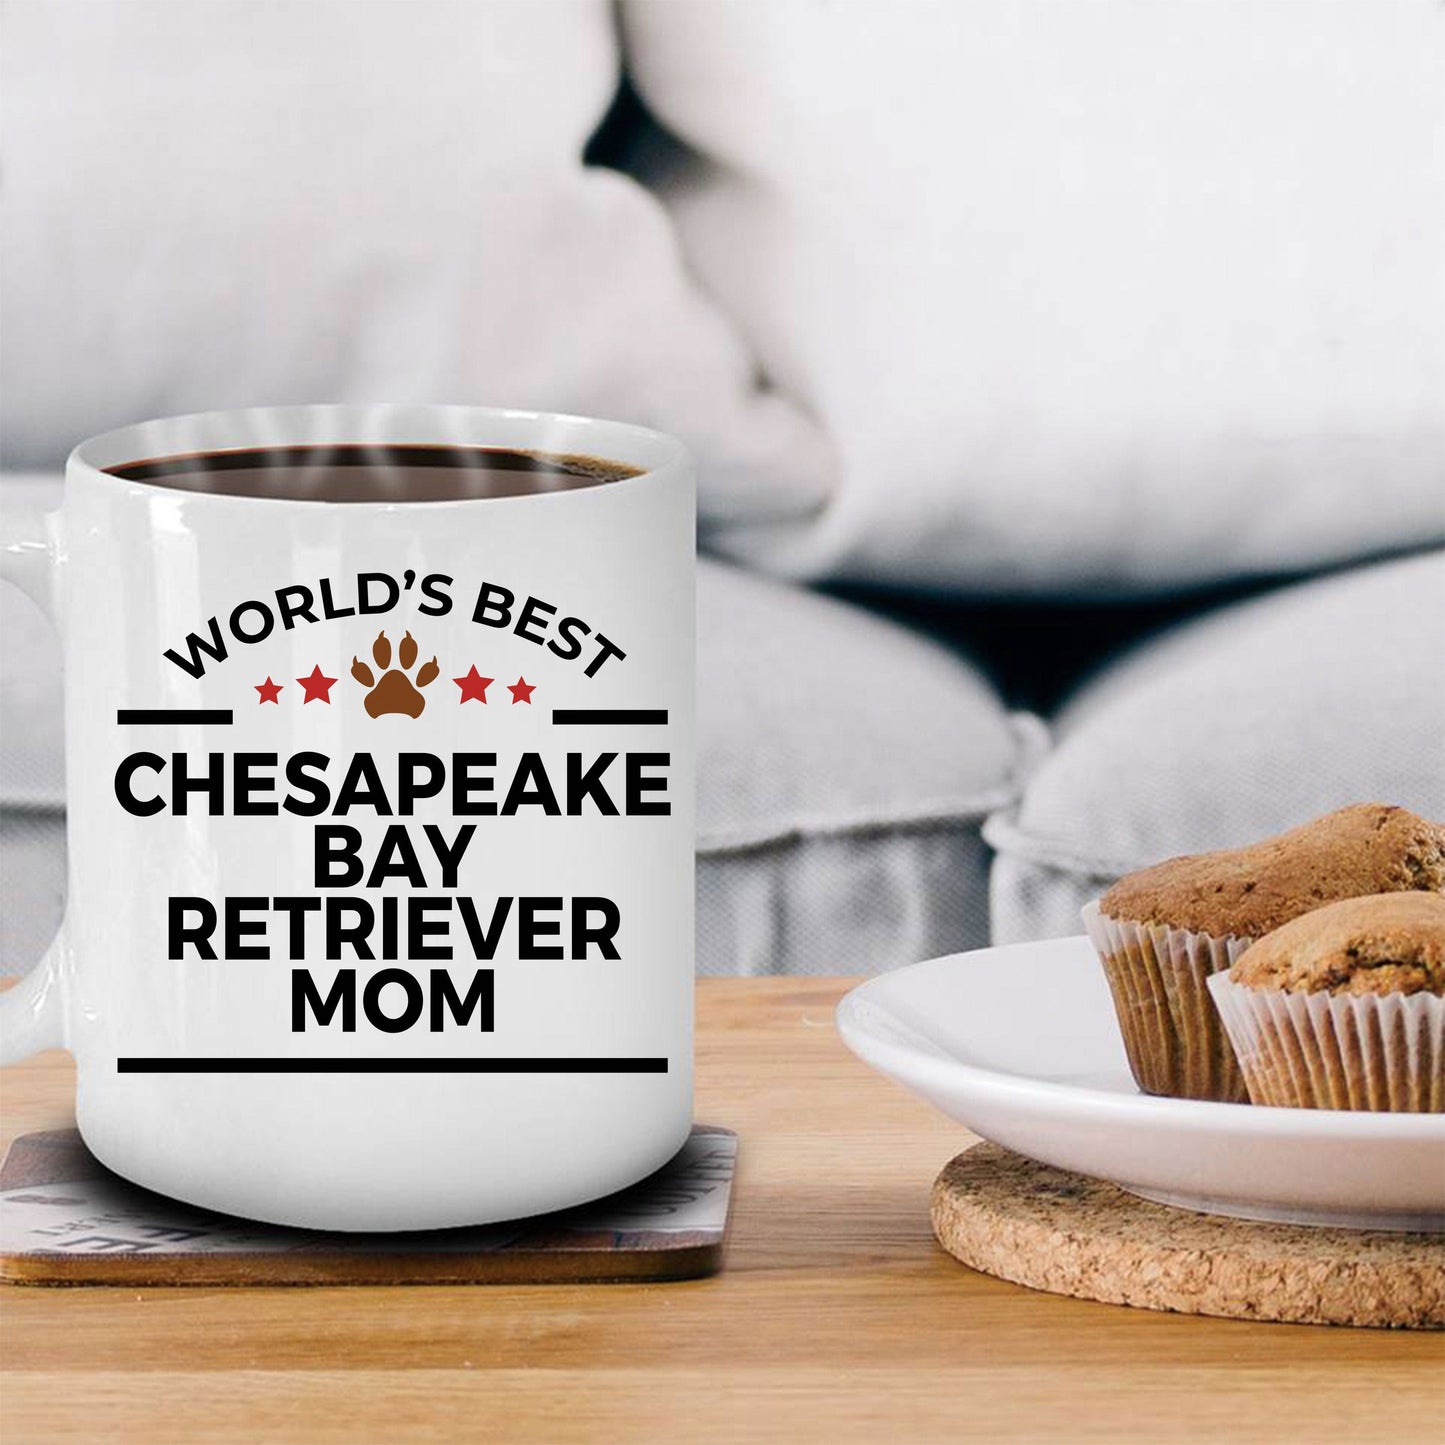 Chesapeake Bay Retriever Dog Mom Coffee Mug